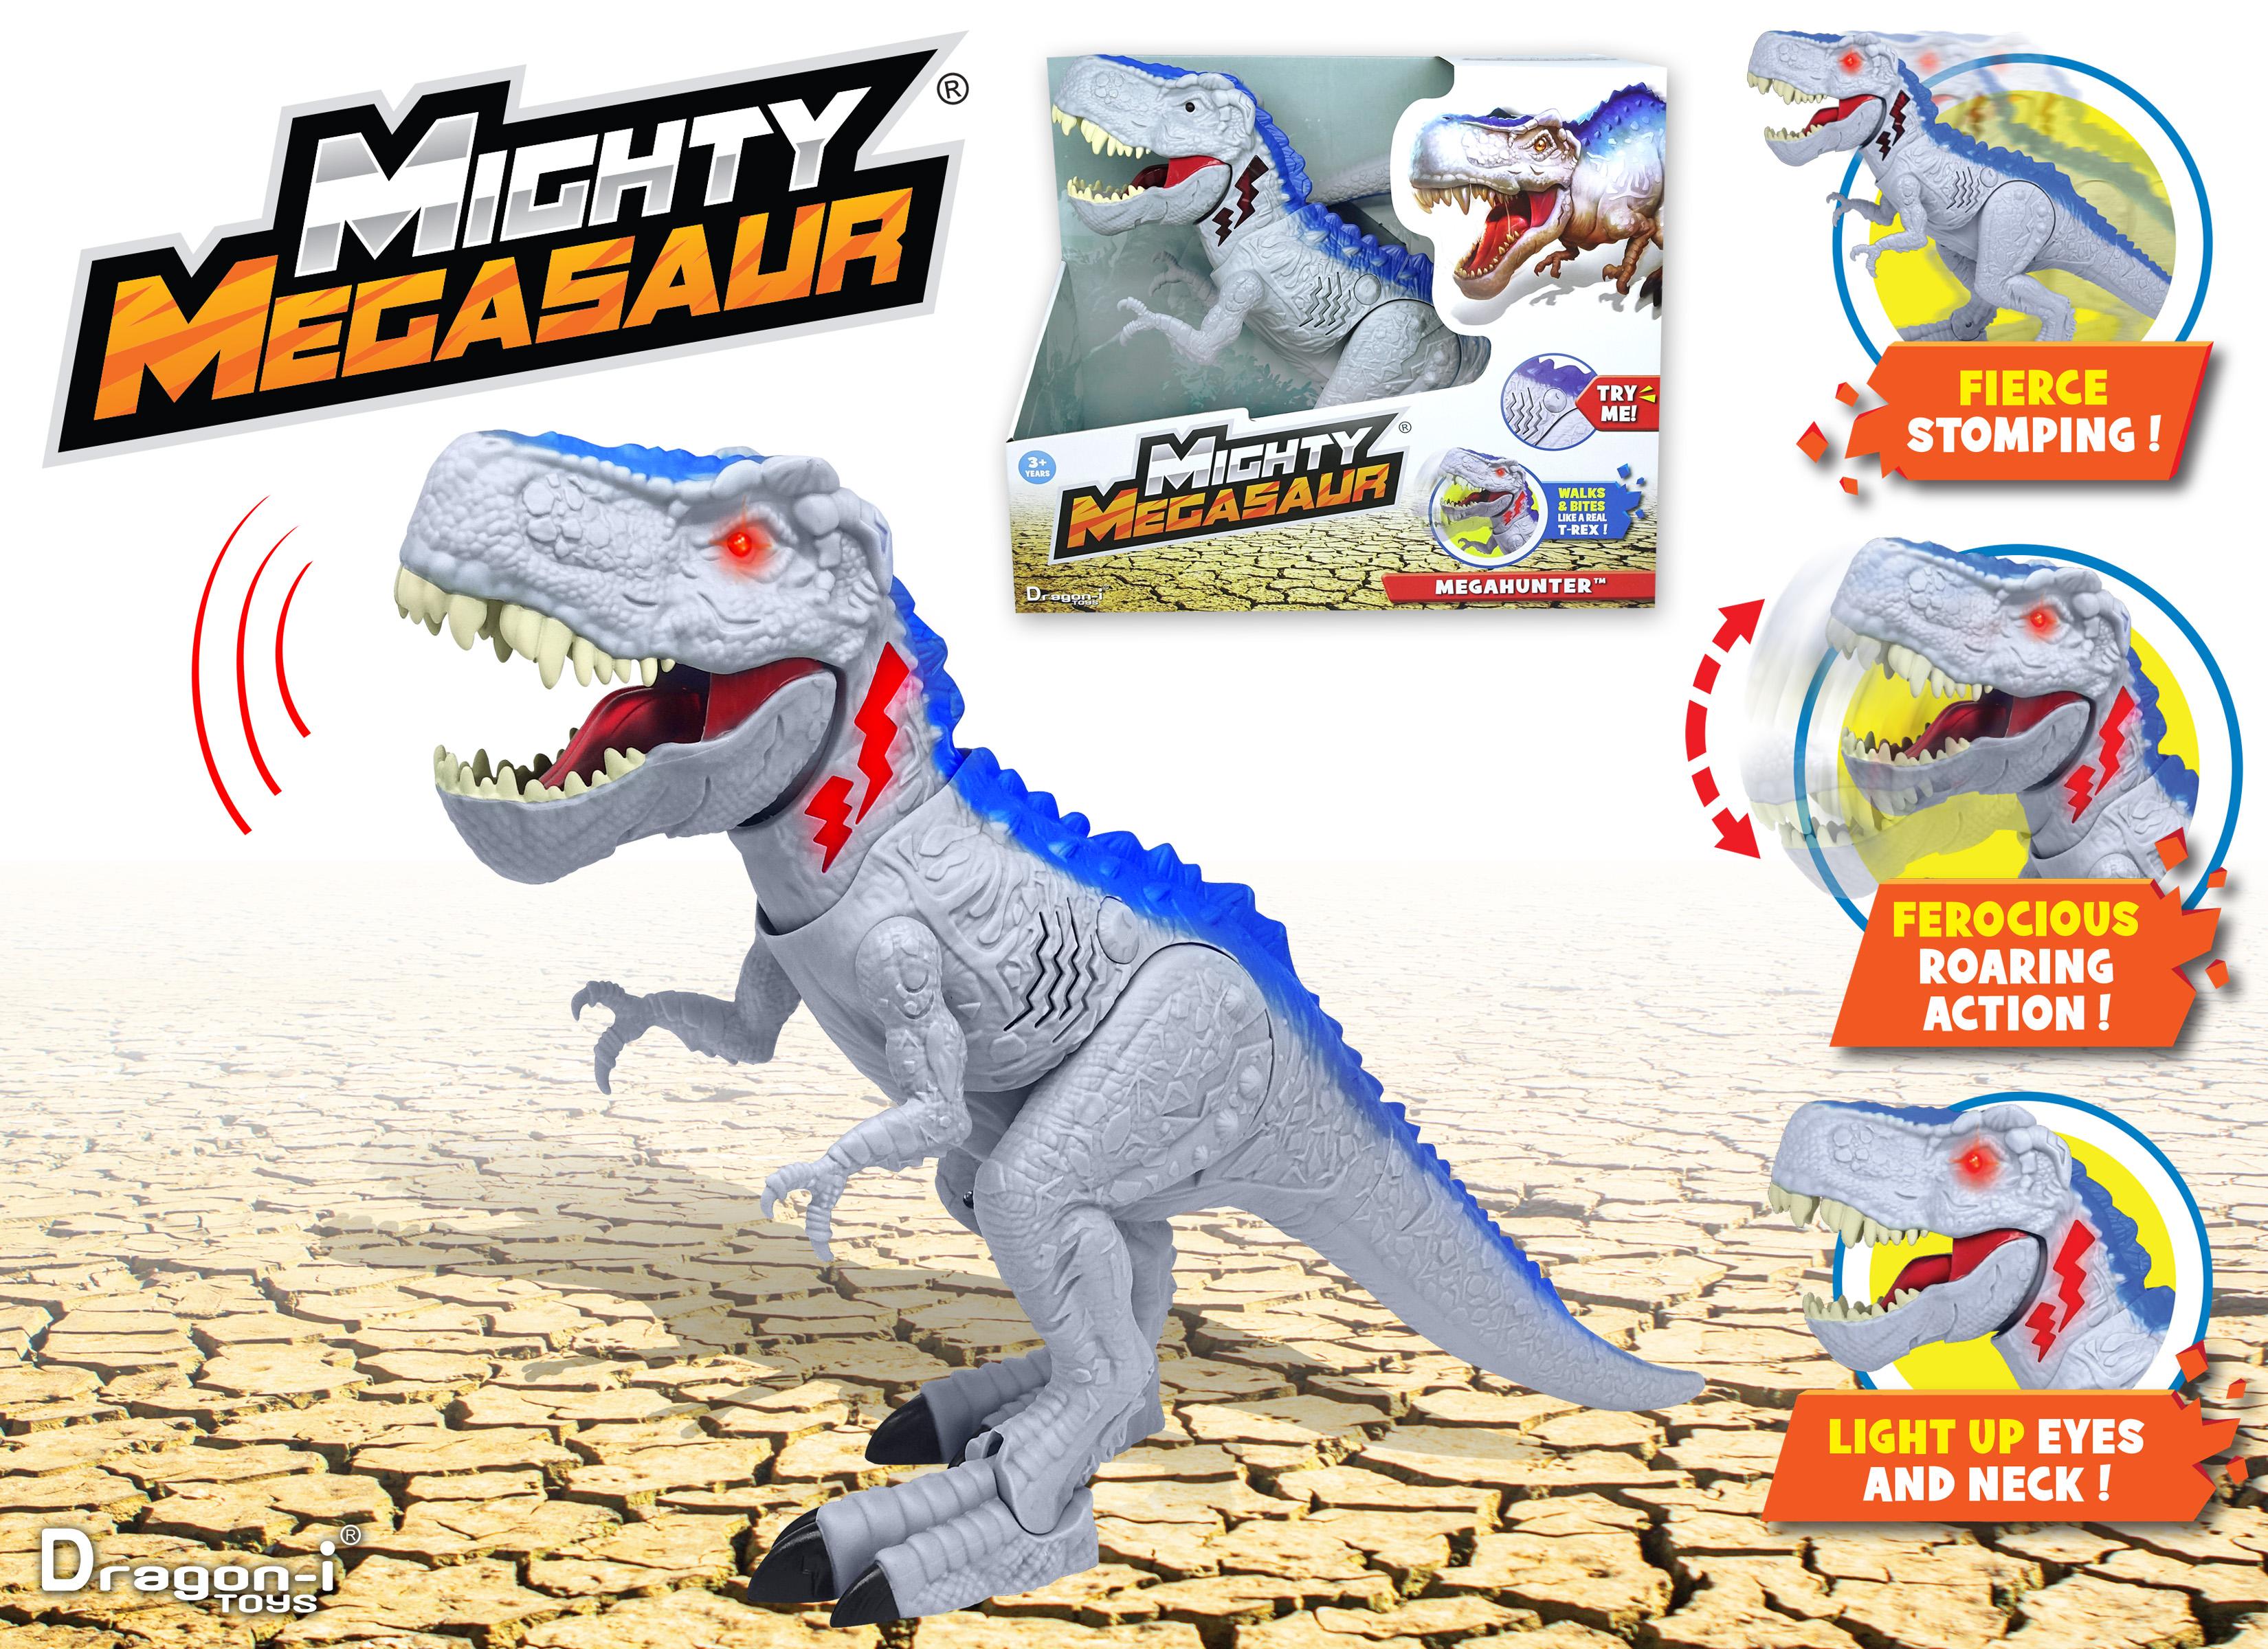 Mighty Megasaur Megahunter Grey Blue